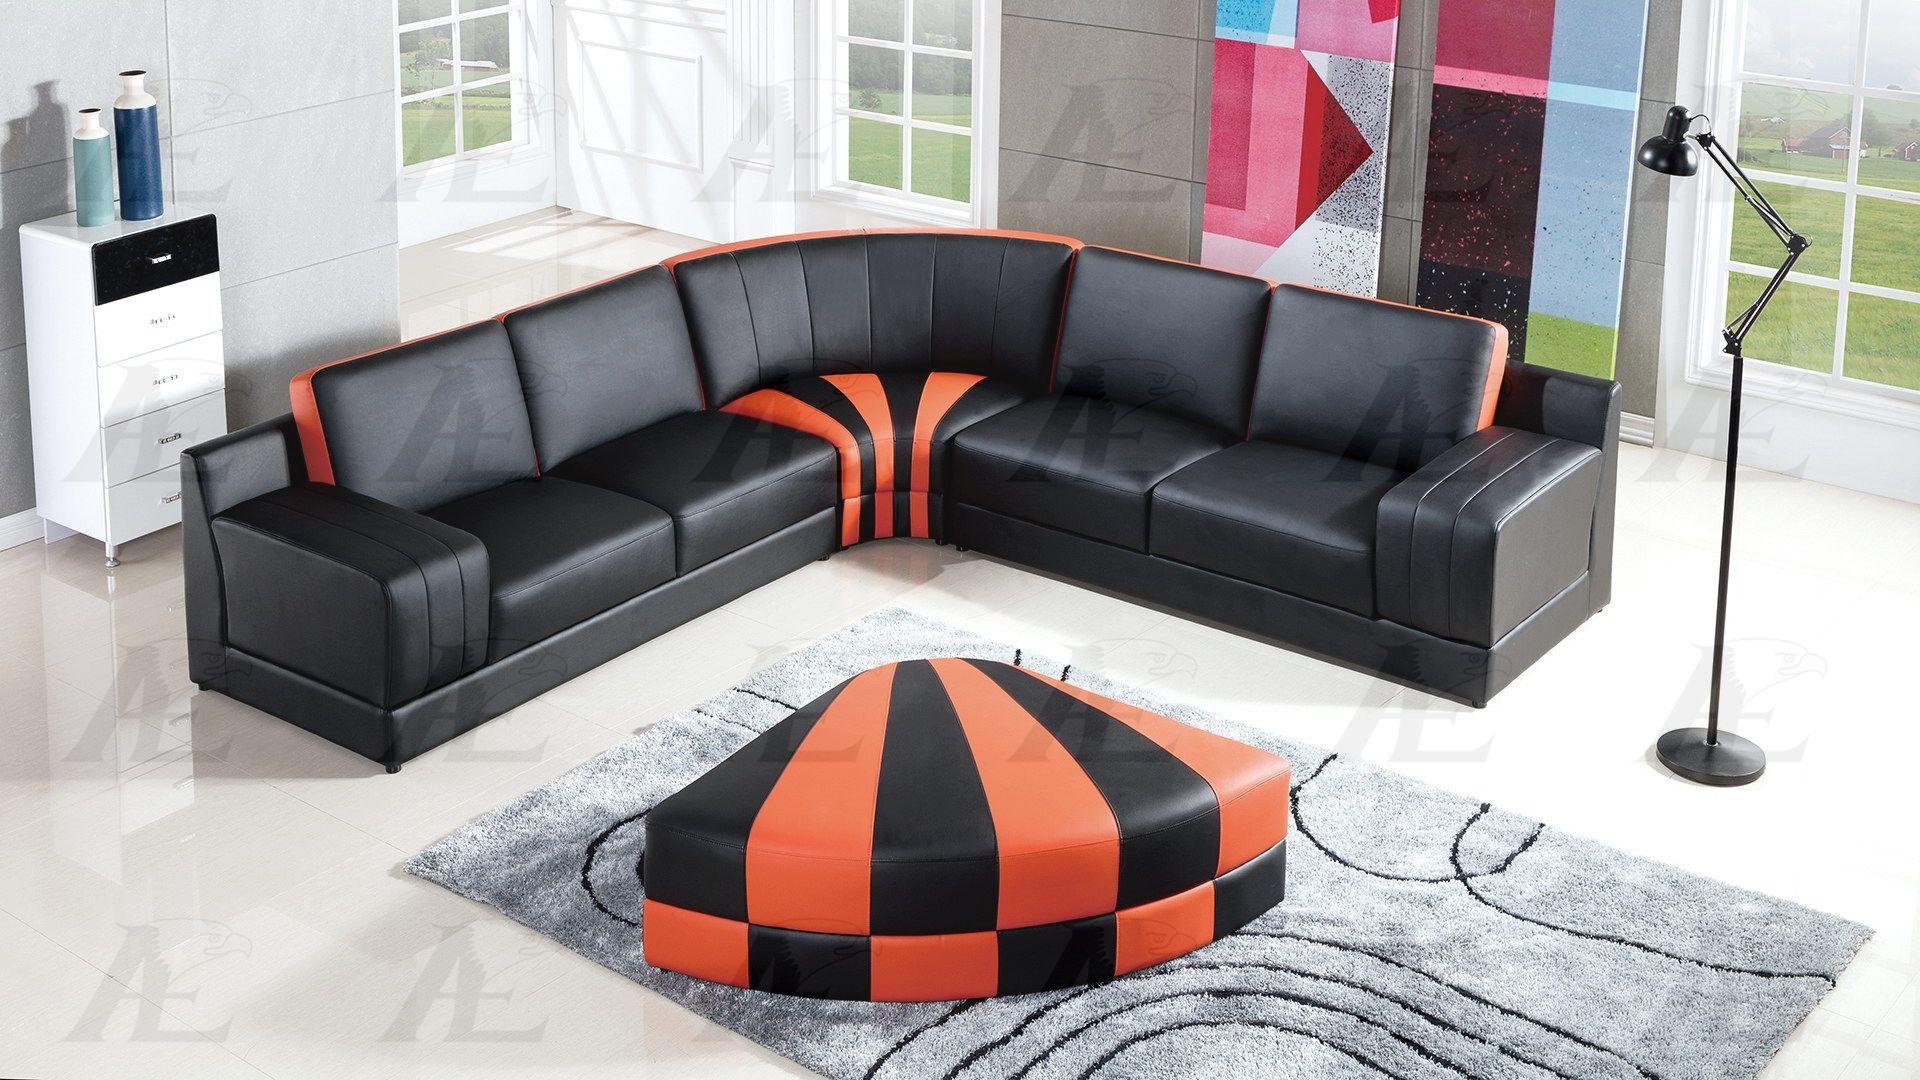 

    
American Eagle Furniture AE-L901M-BK.ORG Black Orange Sectional 2 Sofas Corner Ottoman Set Bonded Leather 4Pcs
